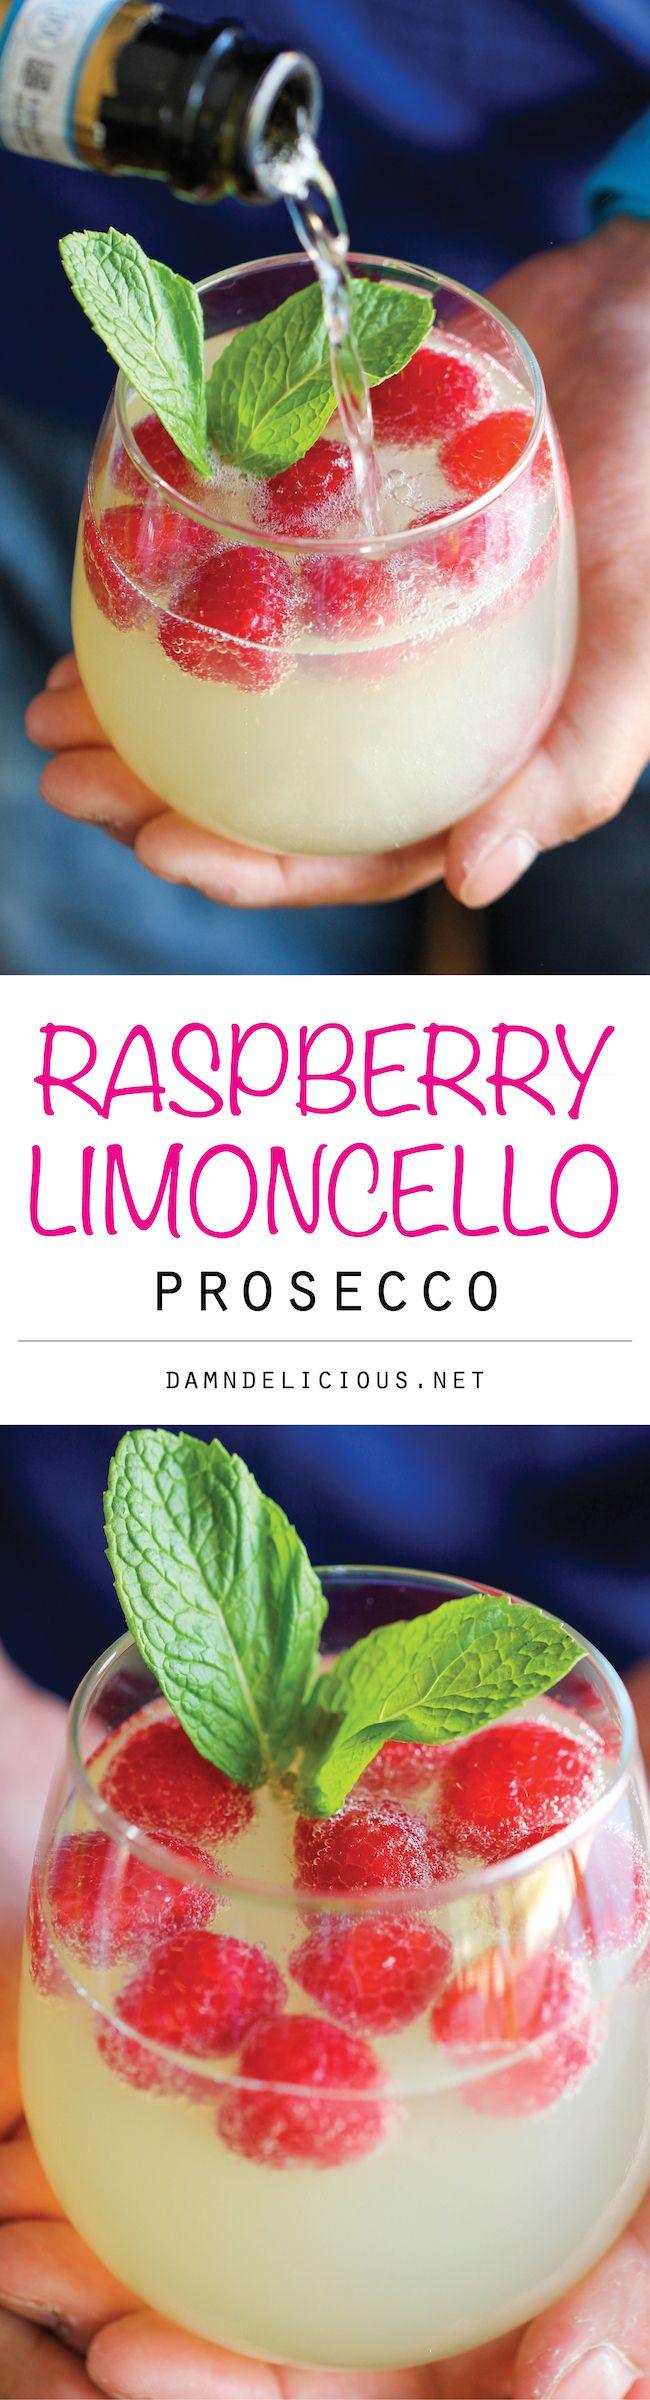 Wedding - Raspberry Limoncello Prosecco